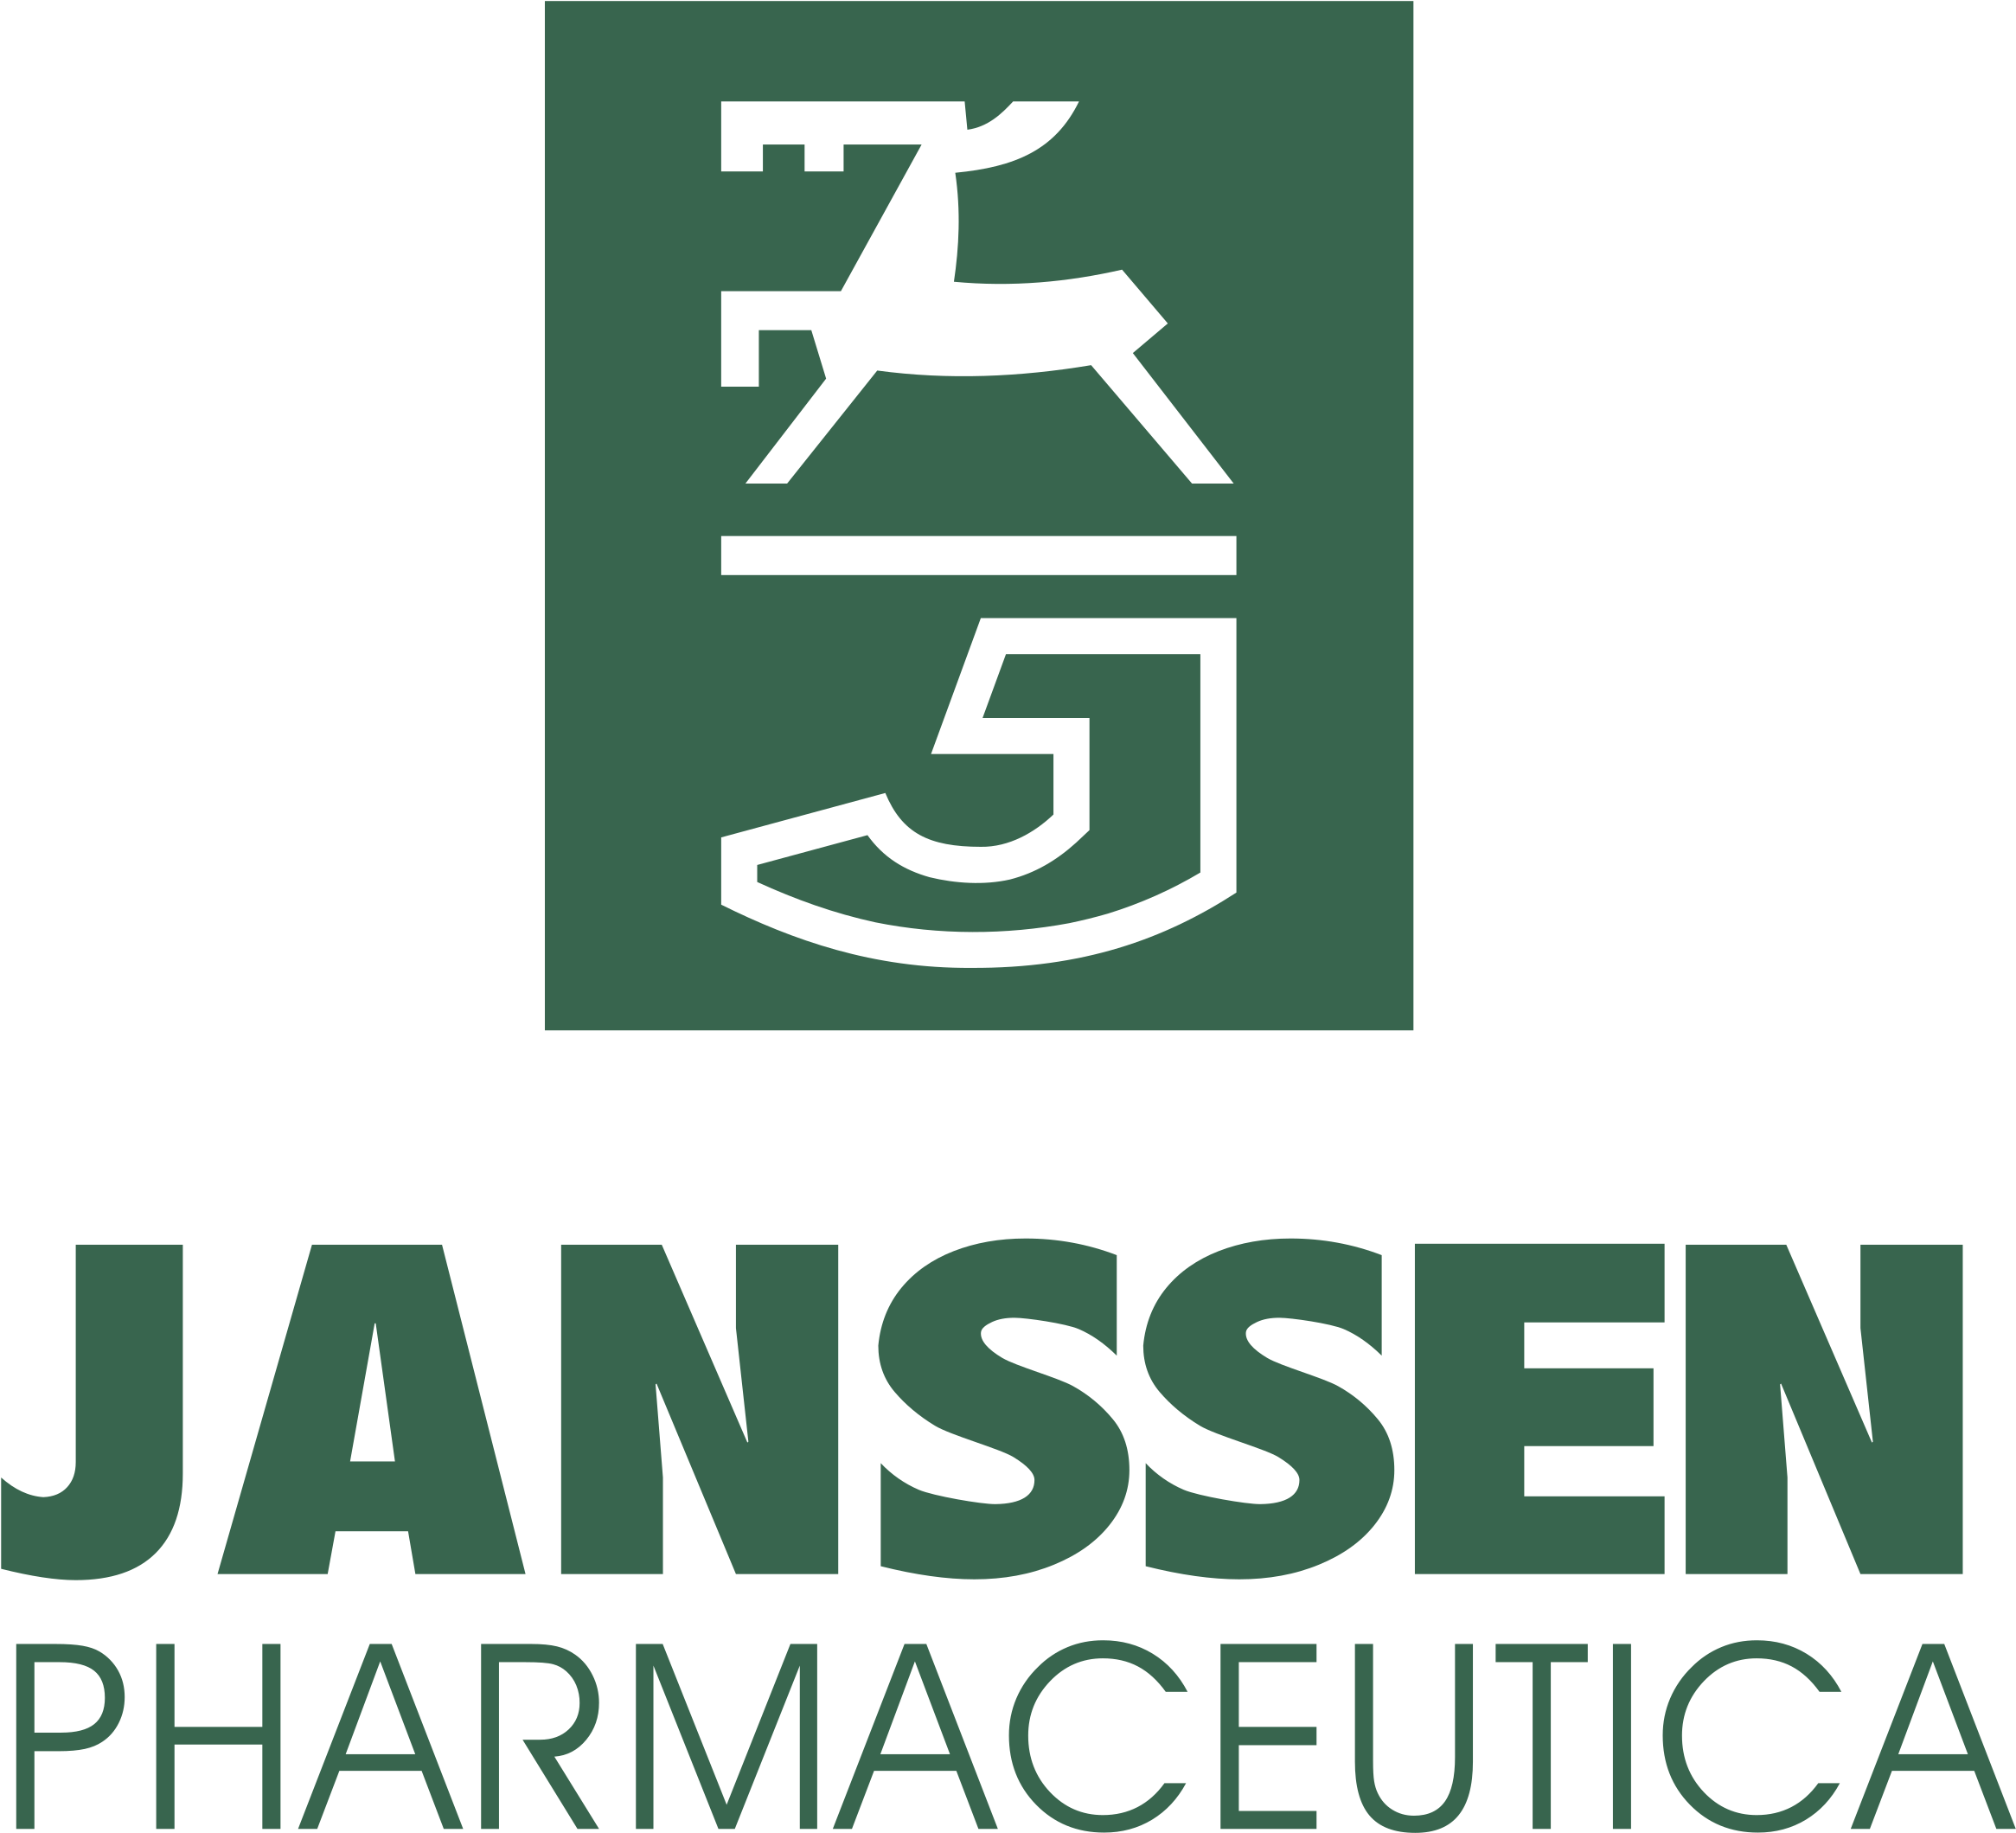 Janssen Pharmaceutica Logo Png Transparent - Emblem (2400x2400), Png Download